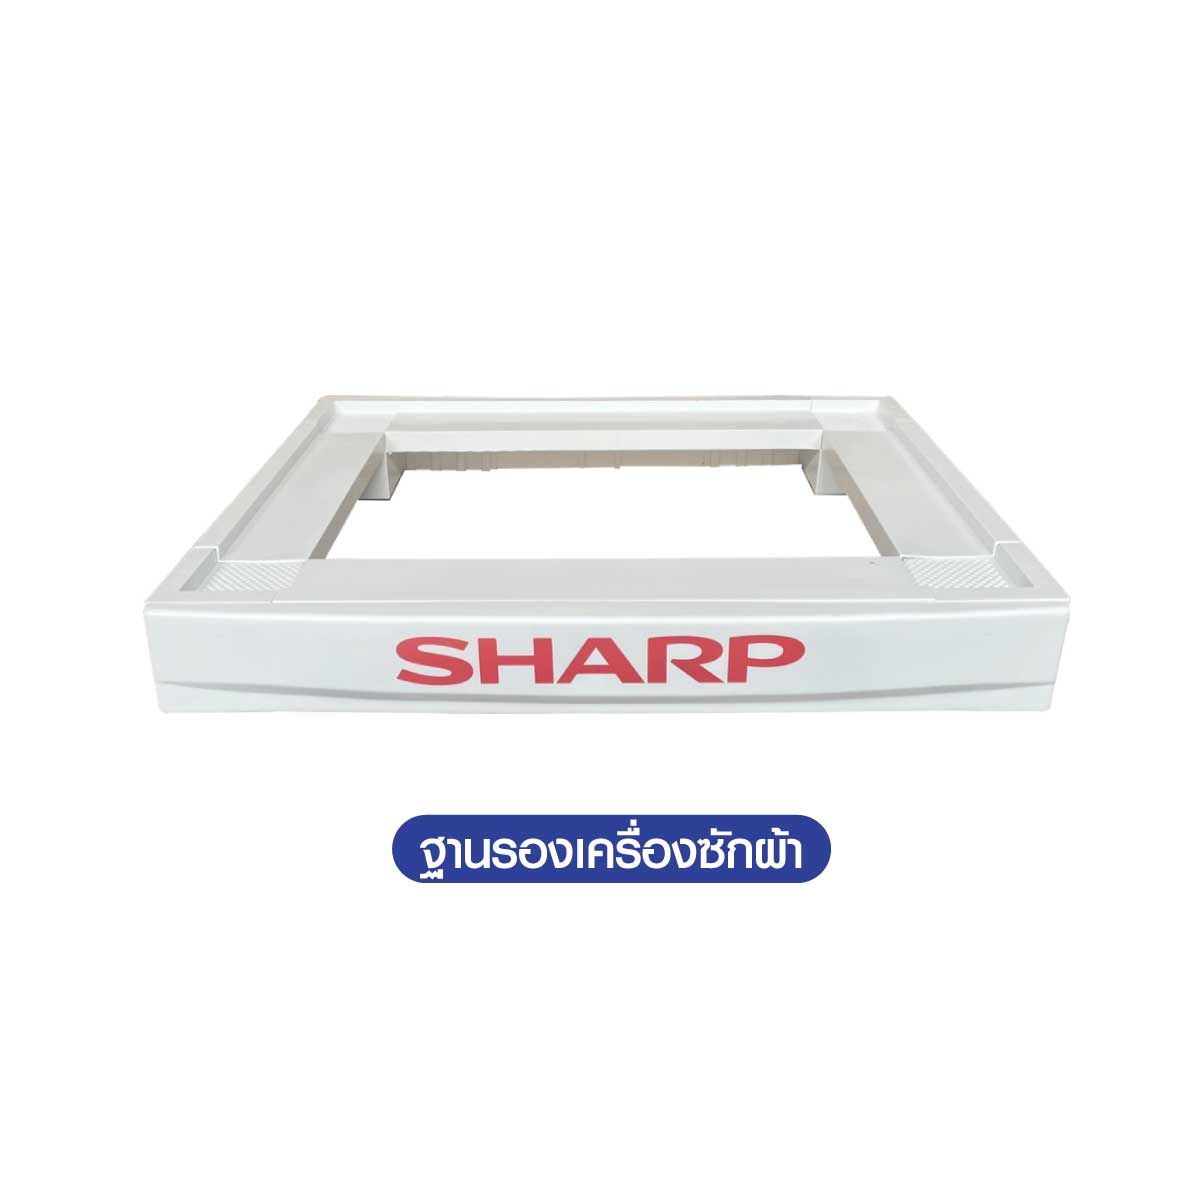 SHARP เครื่องซักผ้าฝาหน้า 8Kg INVERTER,HONOR SE Series สีขาว รุ่น ES-FH8AT-W